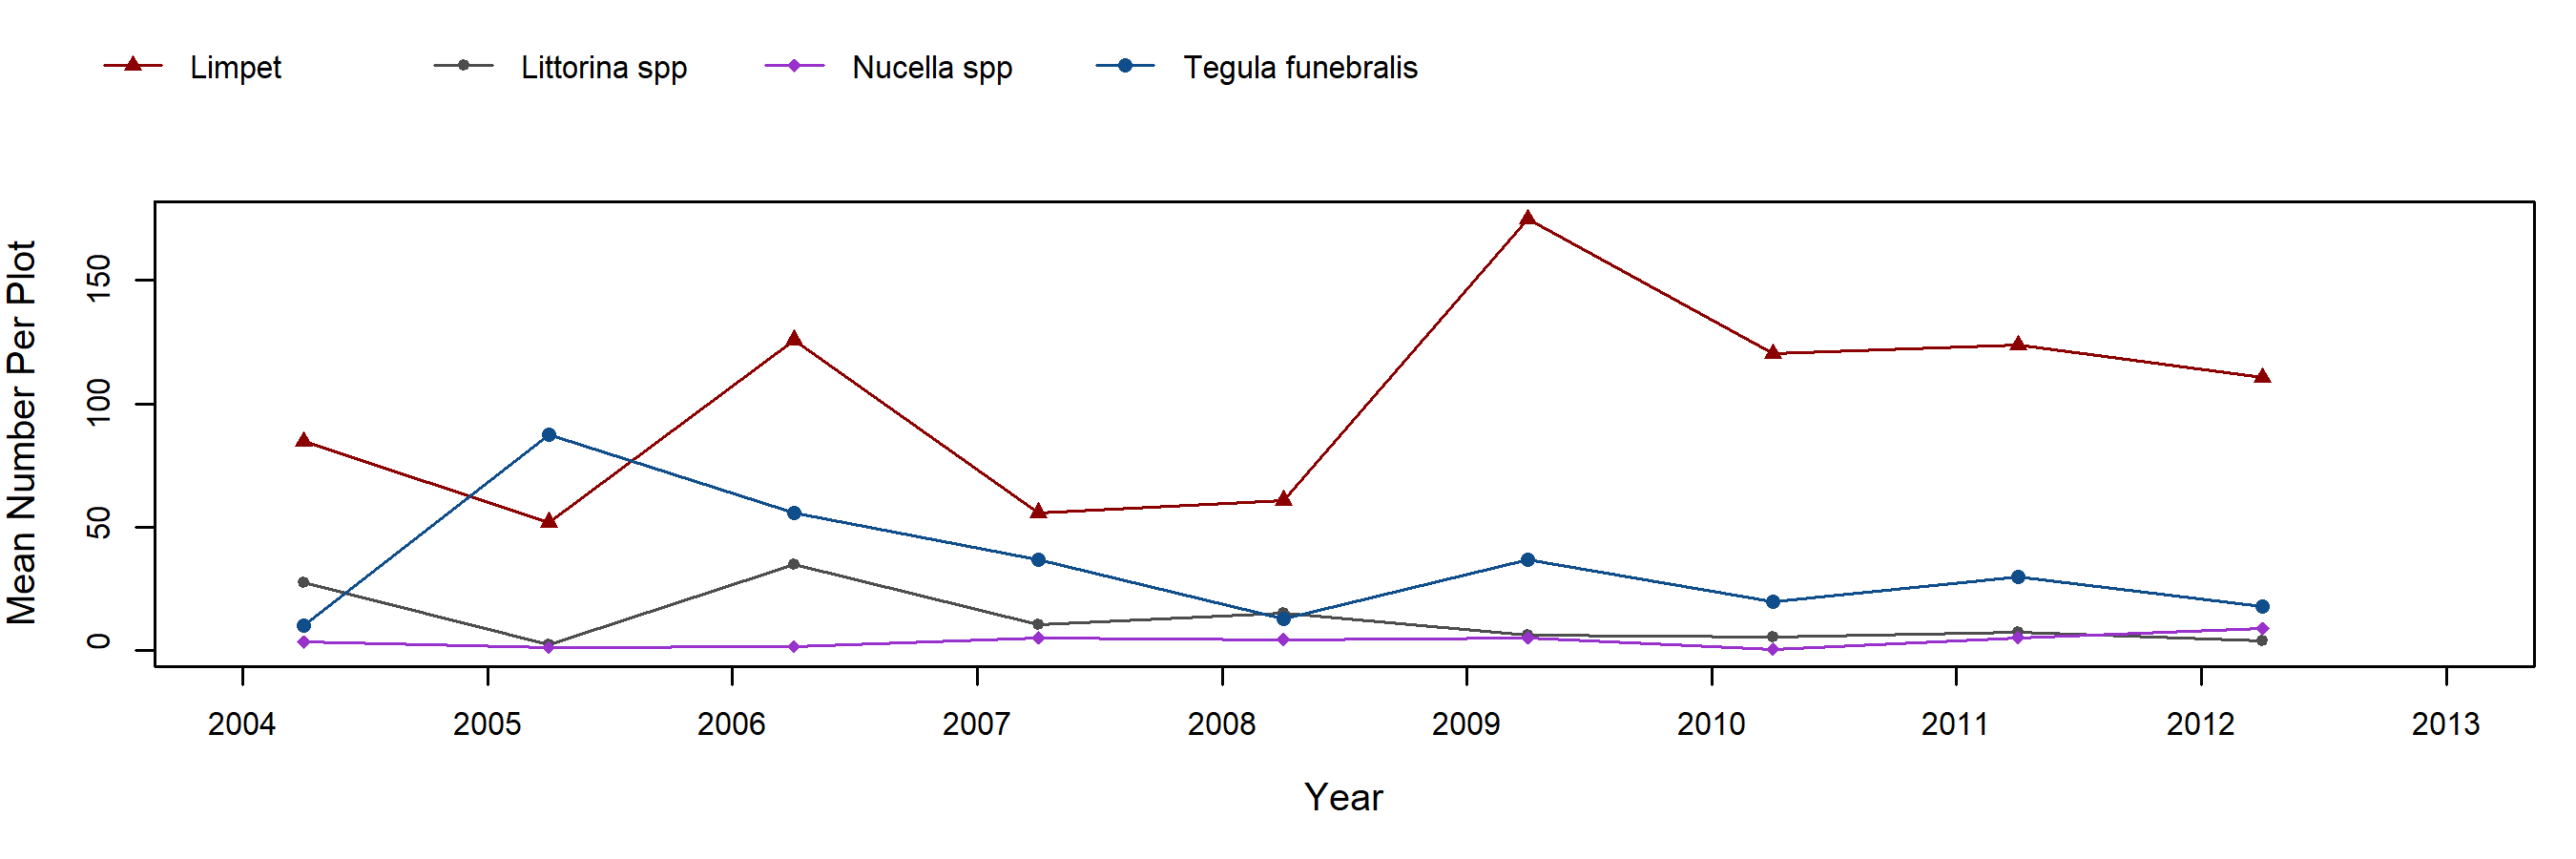 Sea Ranch Mytilus trend plot